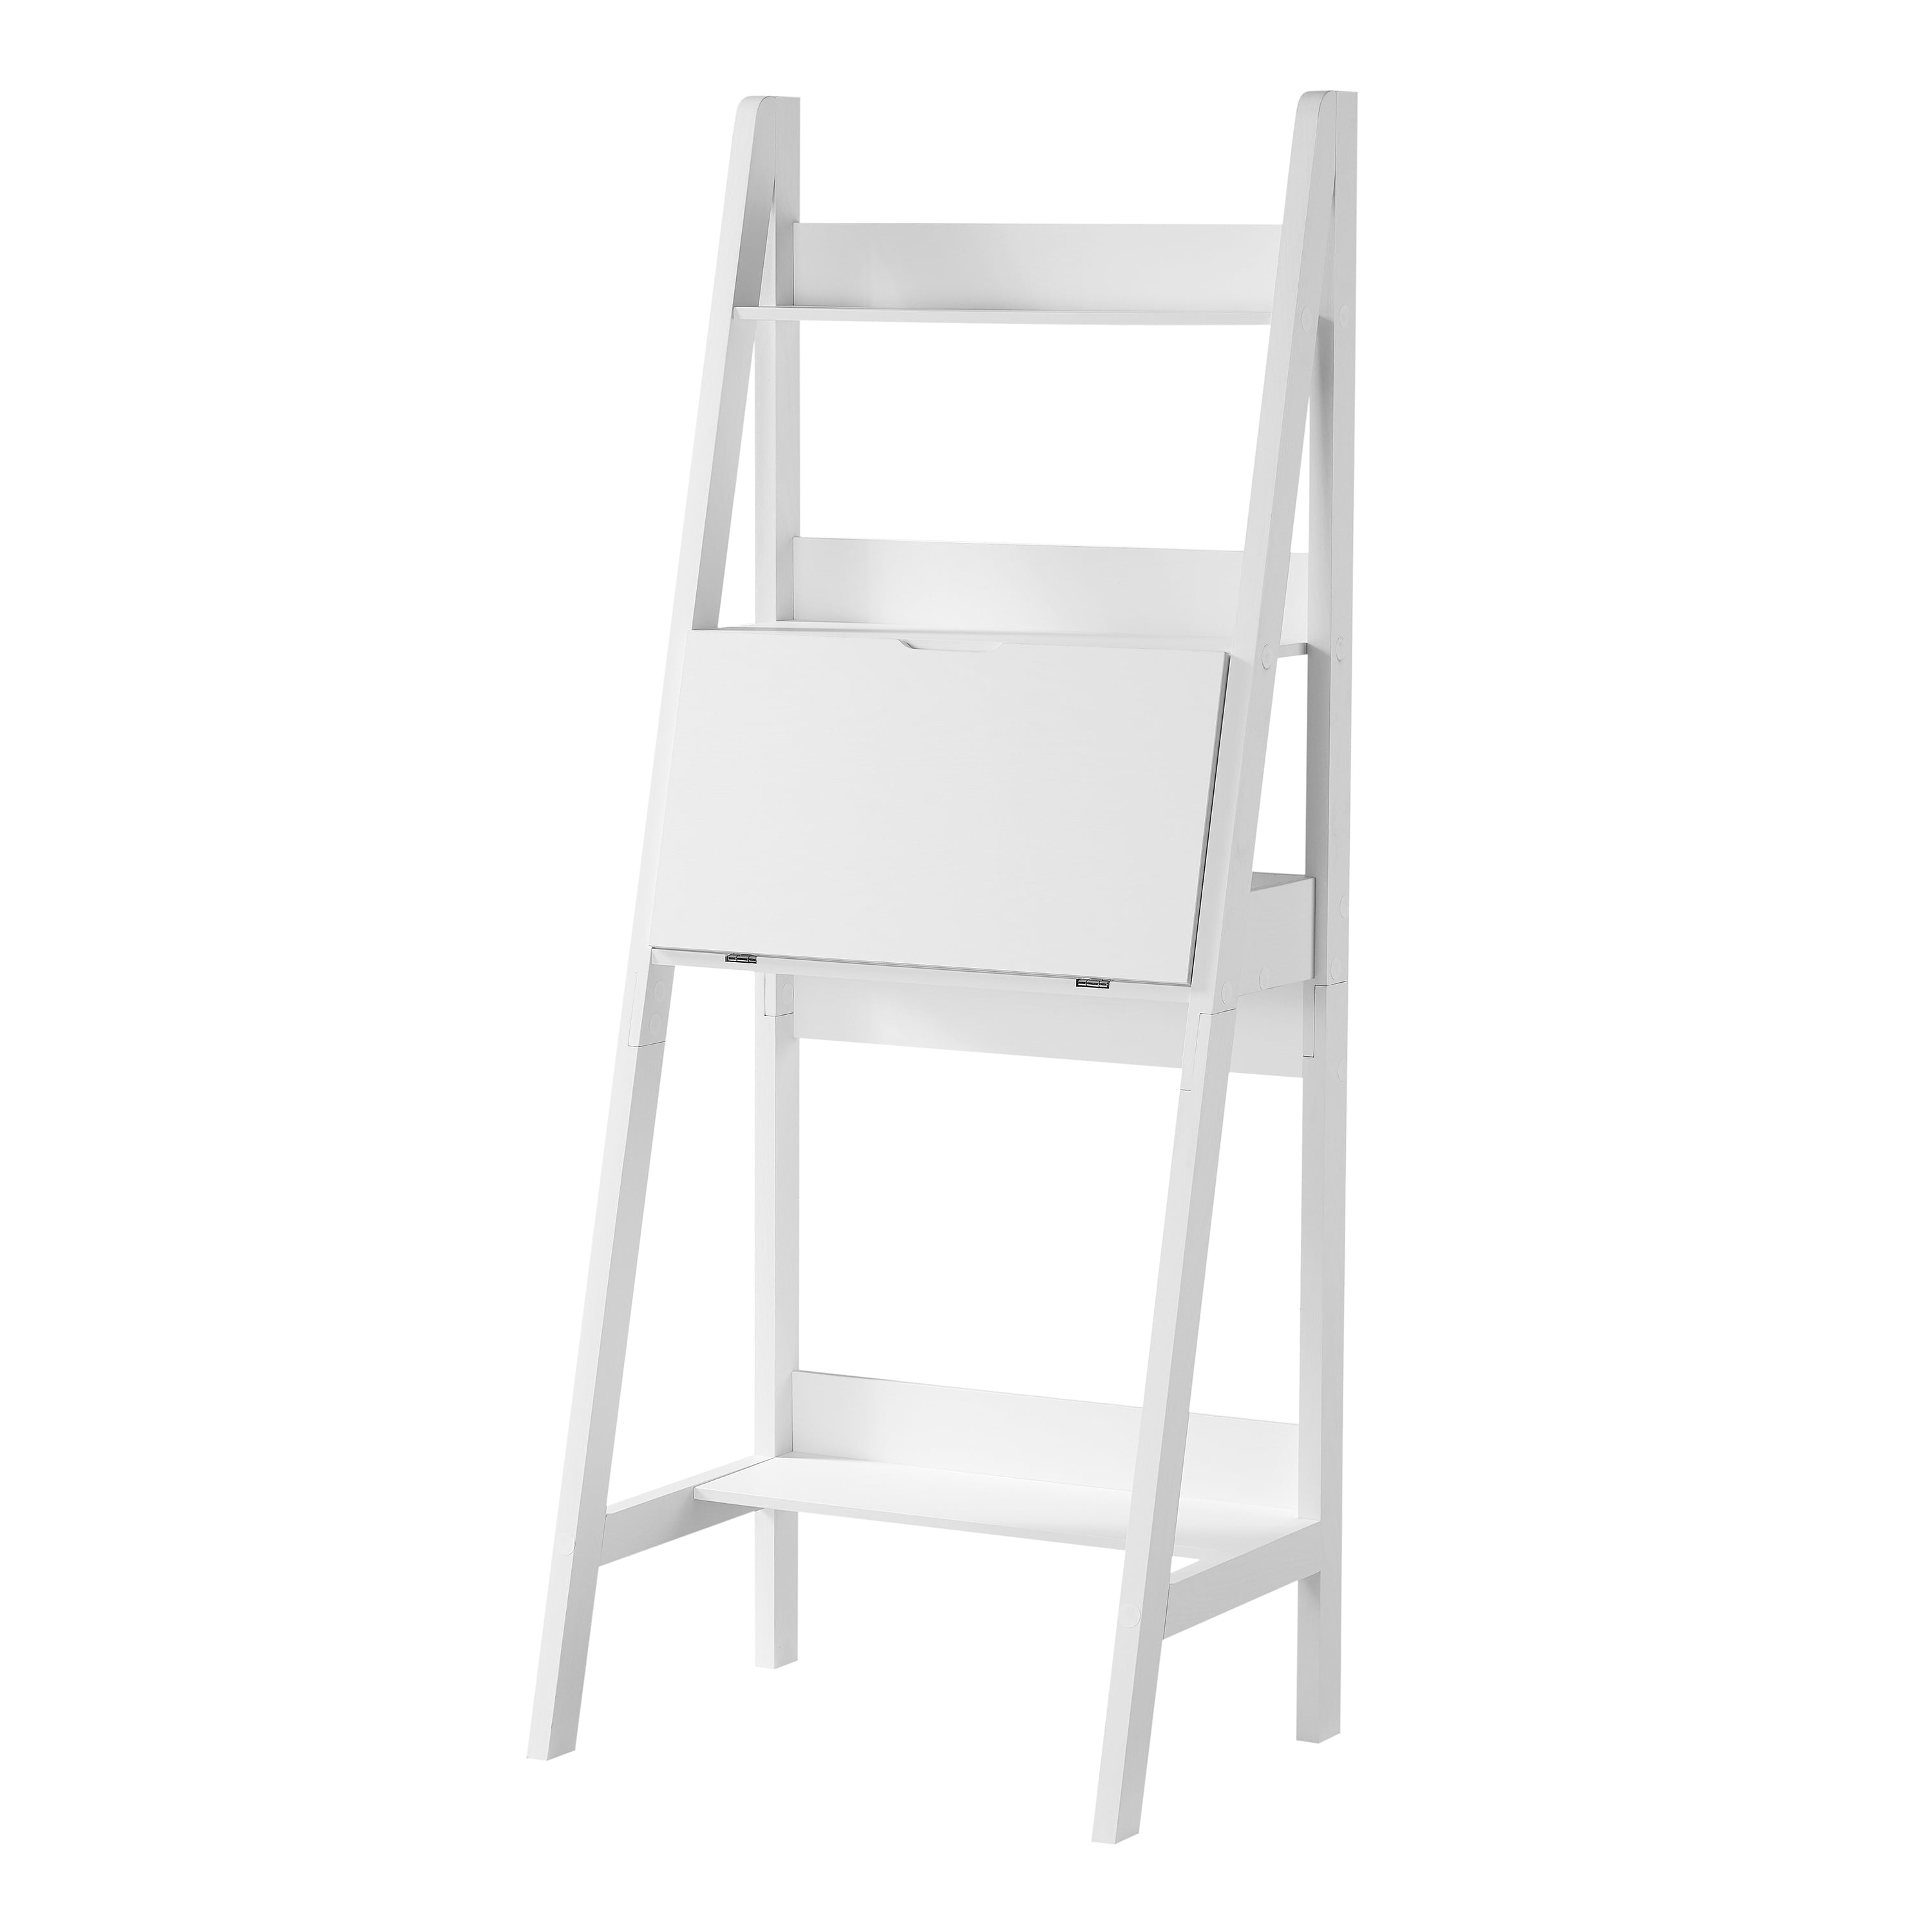 Mainstays Contemporary 3 Shelf Ladder Desk White Finish Walmart